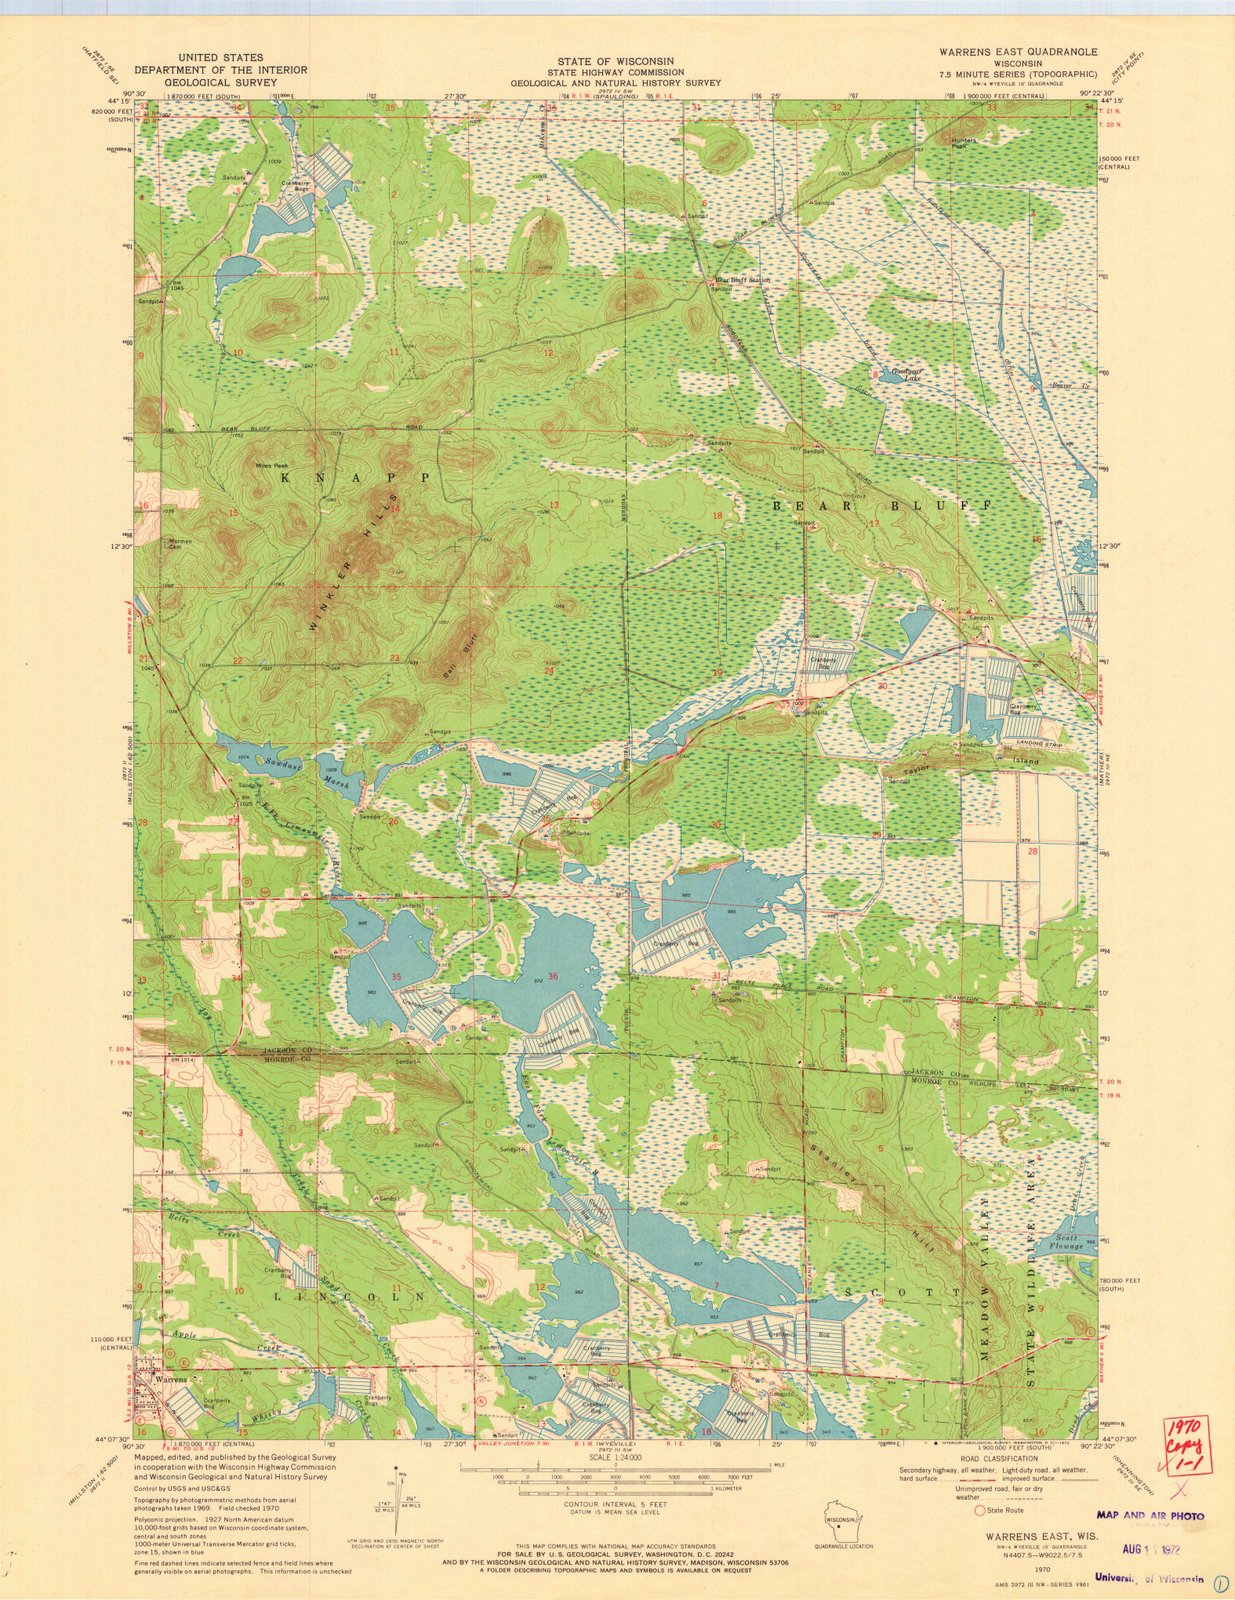 1970 Warrens East, WI - Wisconsin - USGS Topographic Map